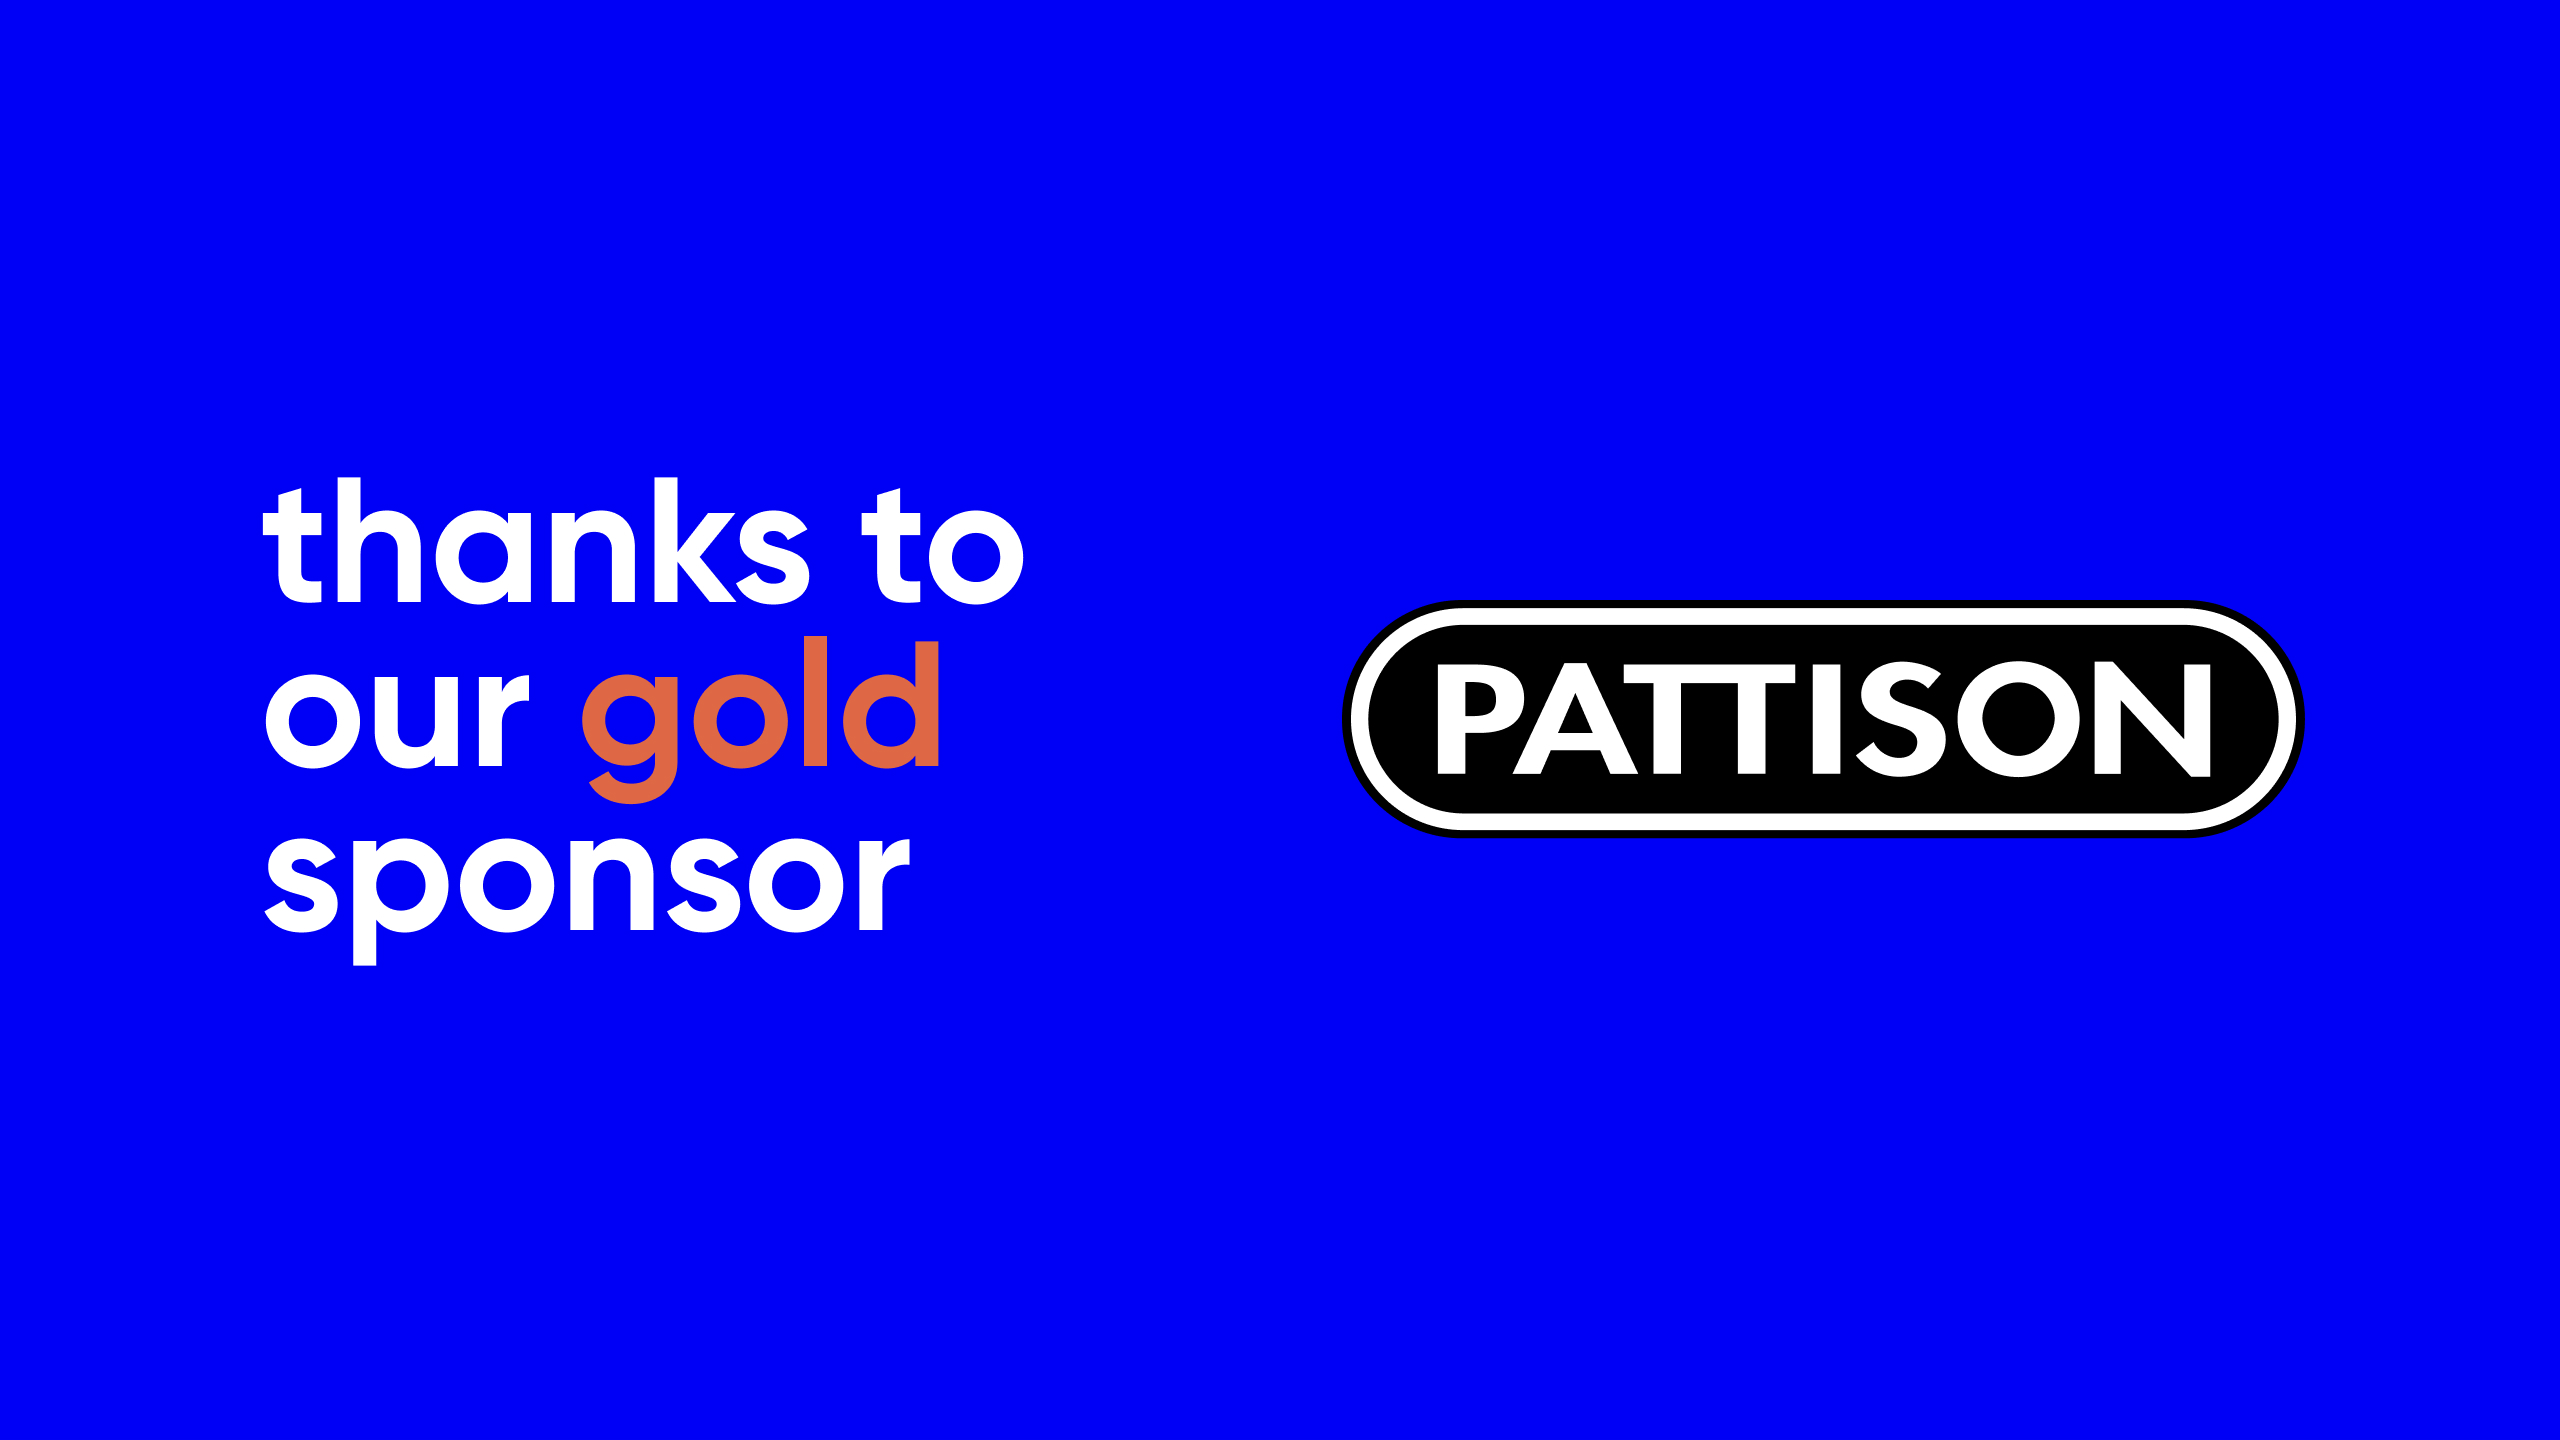 Thanks to our gold sponsor: Pattison.